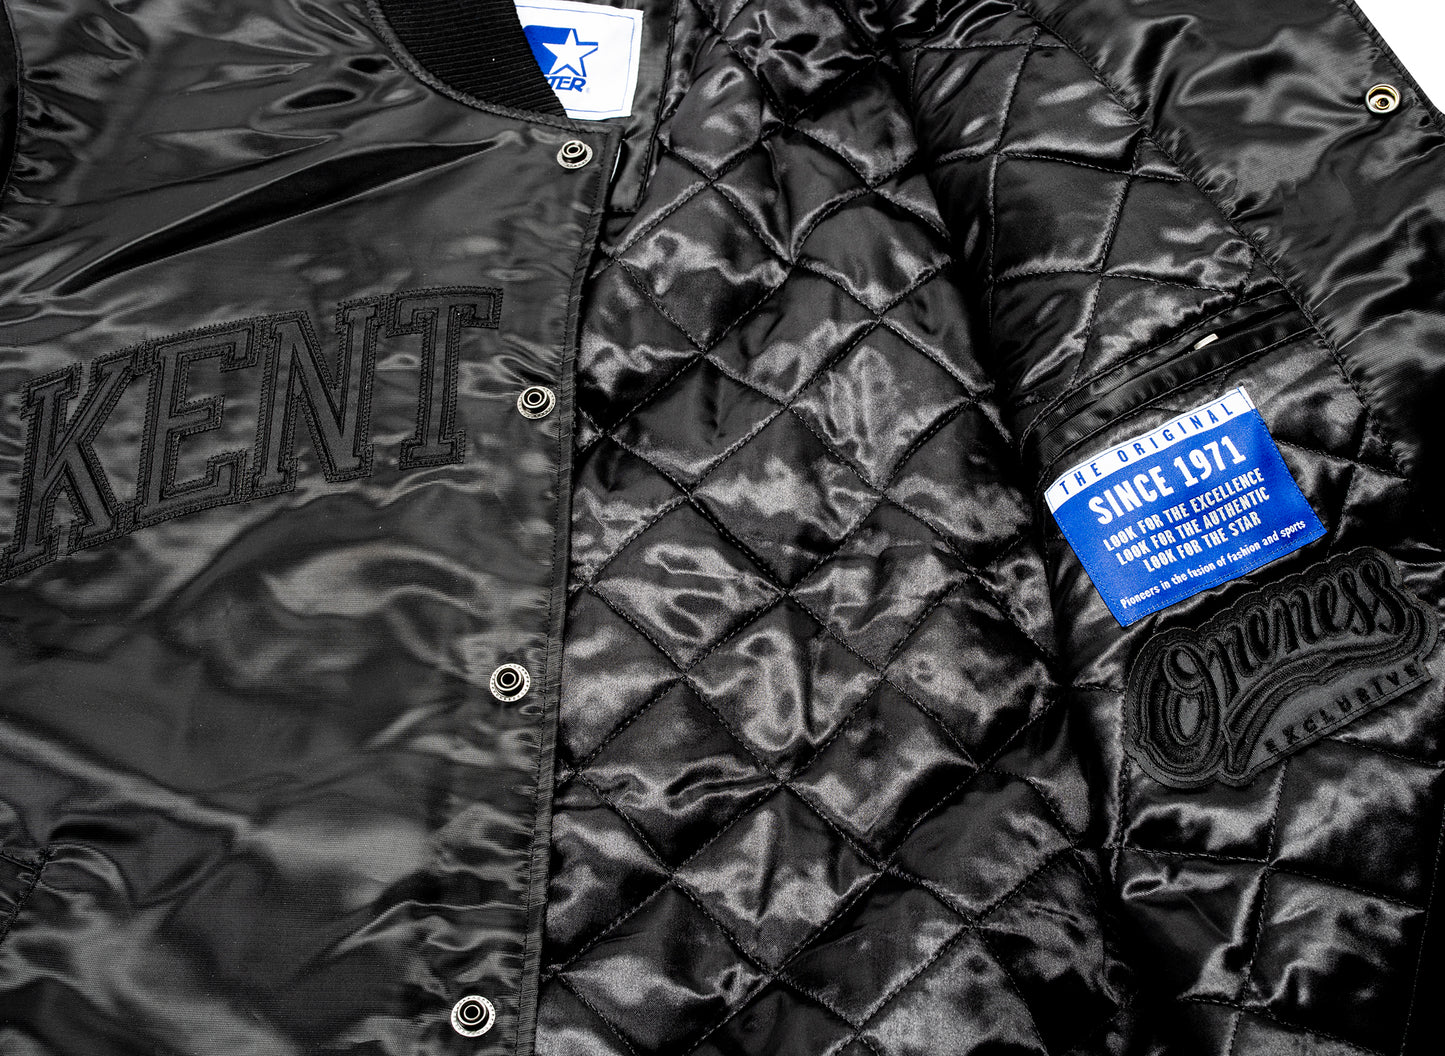 Oneness x Starter University of Kentucky Jacket - Limited Edition Triple Black Exclusive